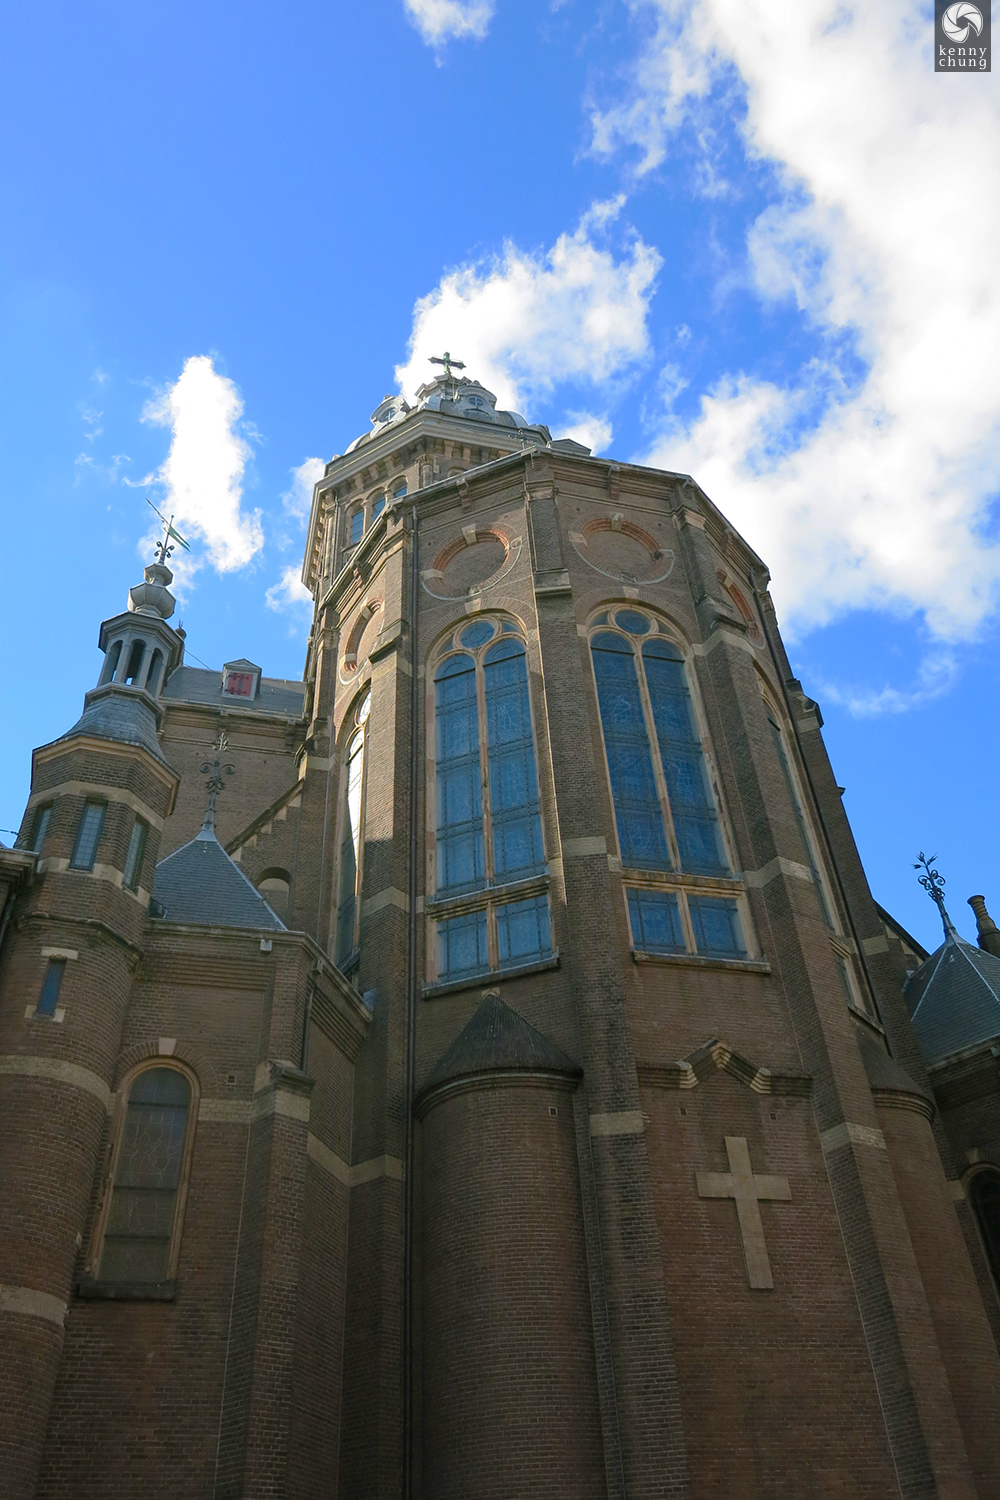 A church tower in Amsterdam